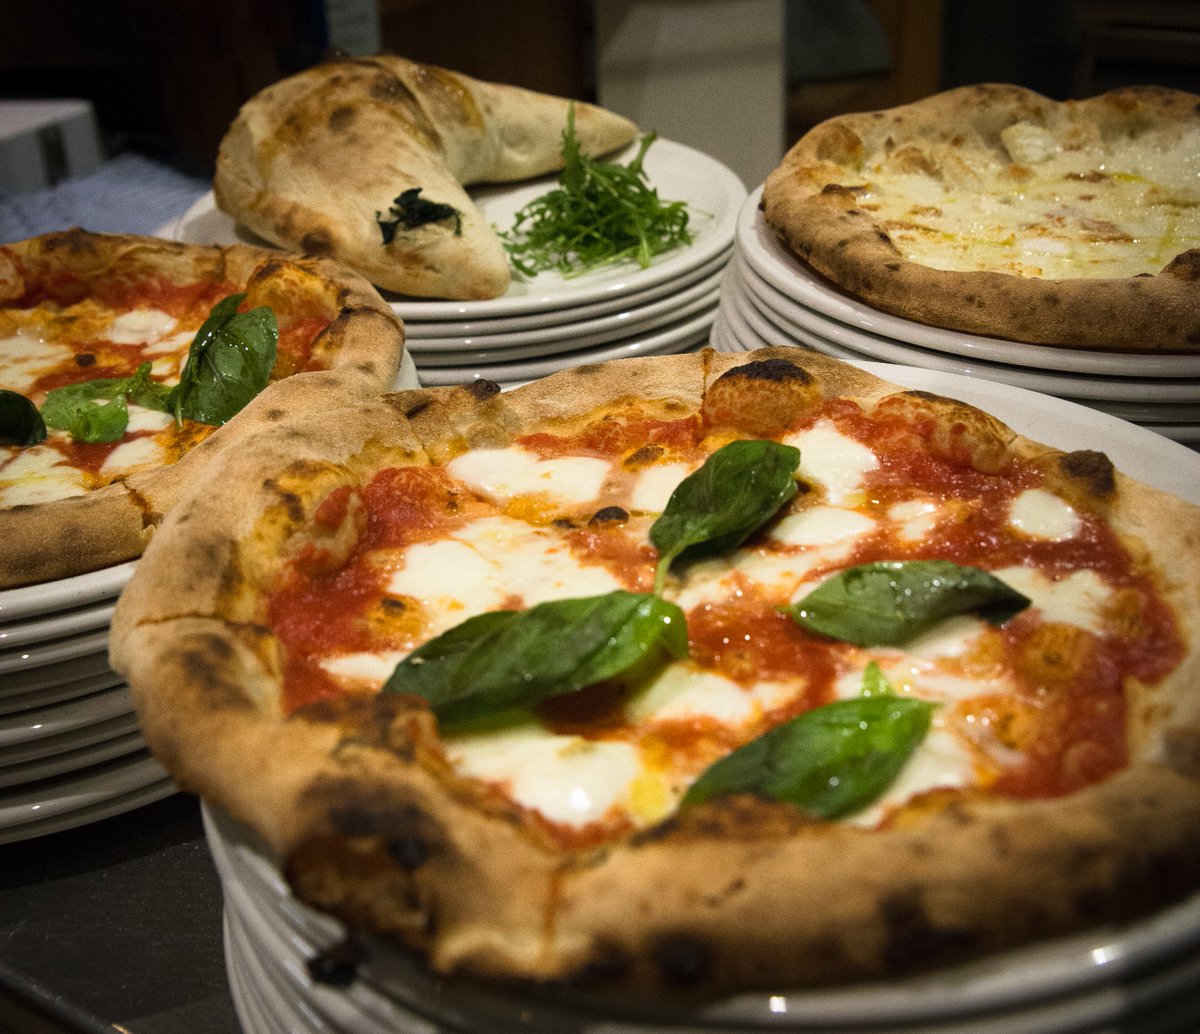 Treat yourself to our delicious pizza today!  We use the best ingredients including Caseificio Barone buffalo mozzarella and Molino Quaglia stone pressed flour.  #Pizza #FarmToForm #Italian #GoodFood
wallacewinebars.ie RT